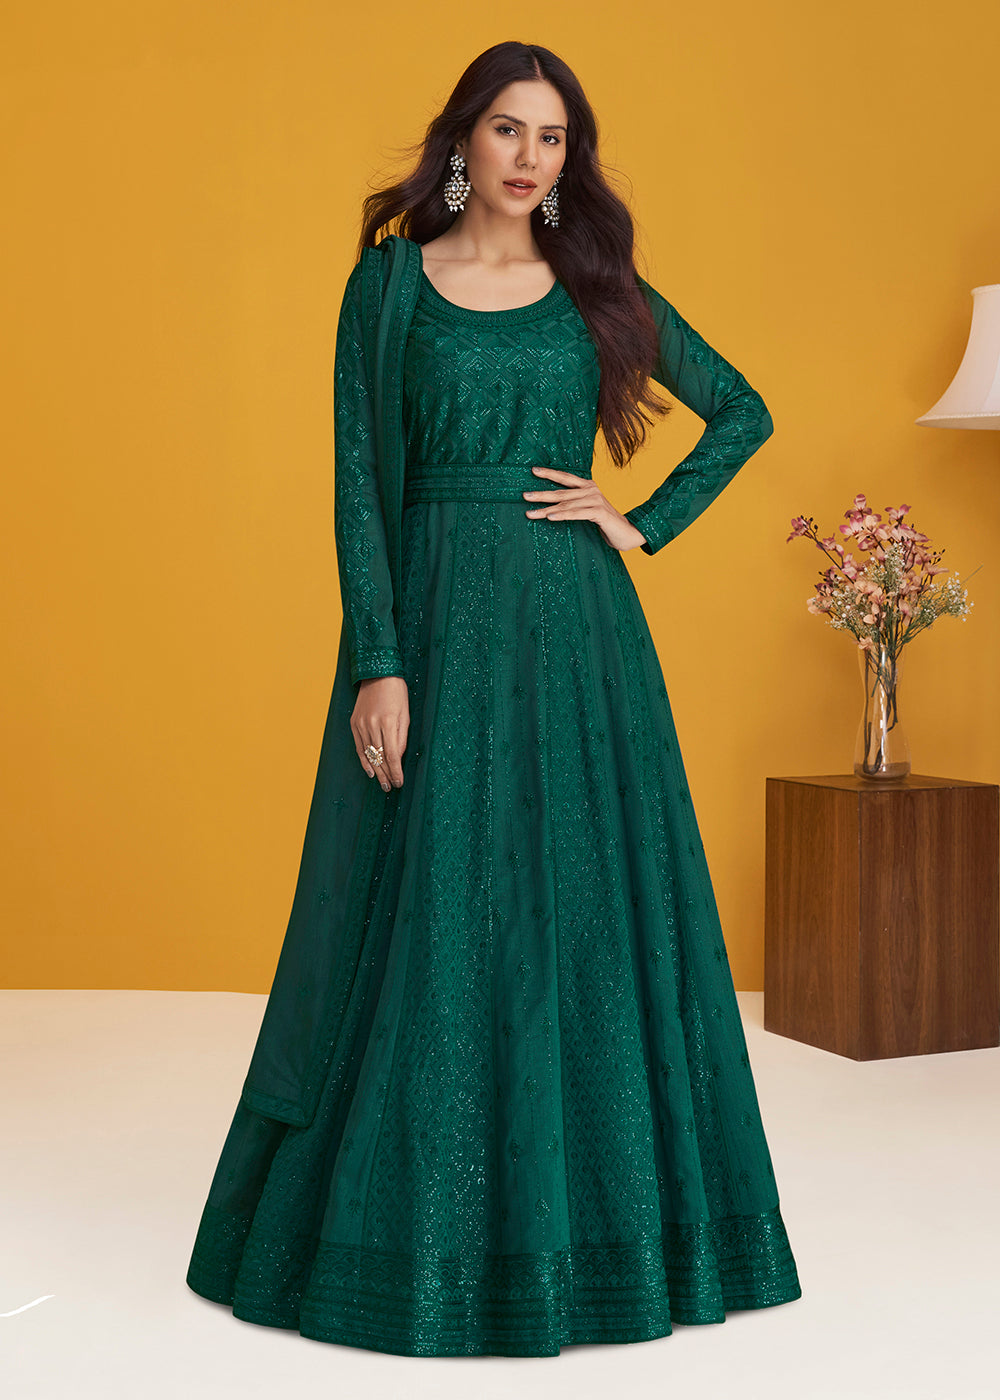 Buy Now Premium Silk Dark Green Embroidered Wedding Anarkali Suit Online in USA, UK, Australia, New Zealand, Canada & Worldwide at Empress Clothing. 